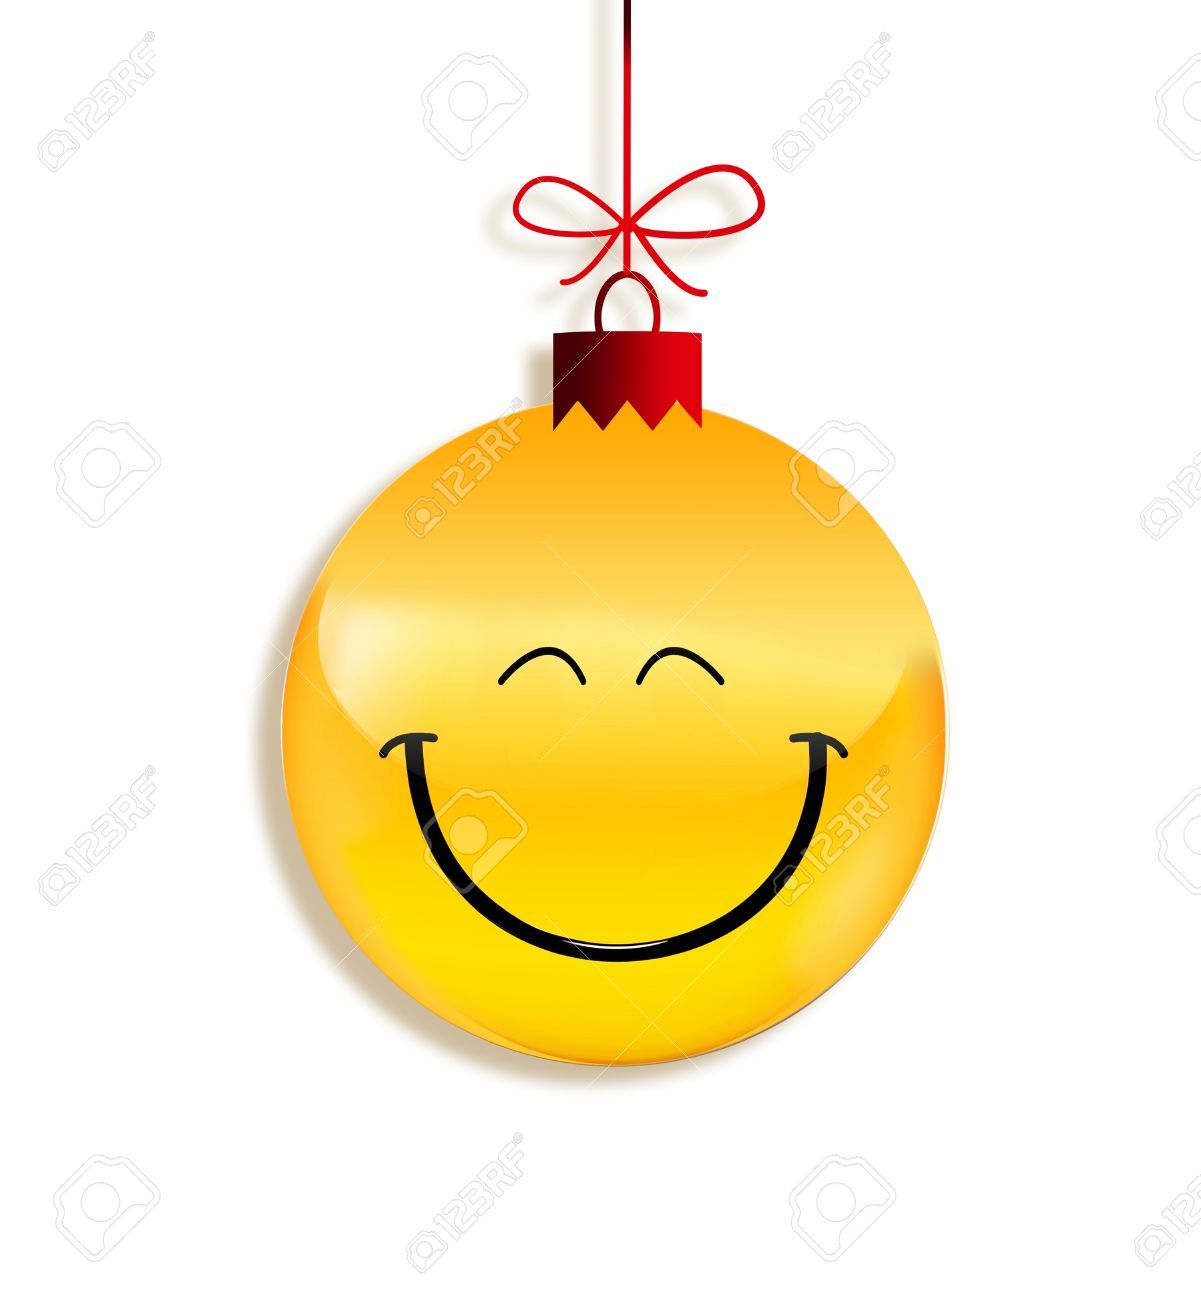 christmas smiley faces: paper emoticon as Christmas ball.